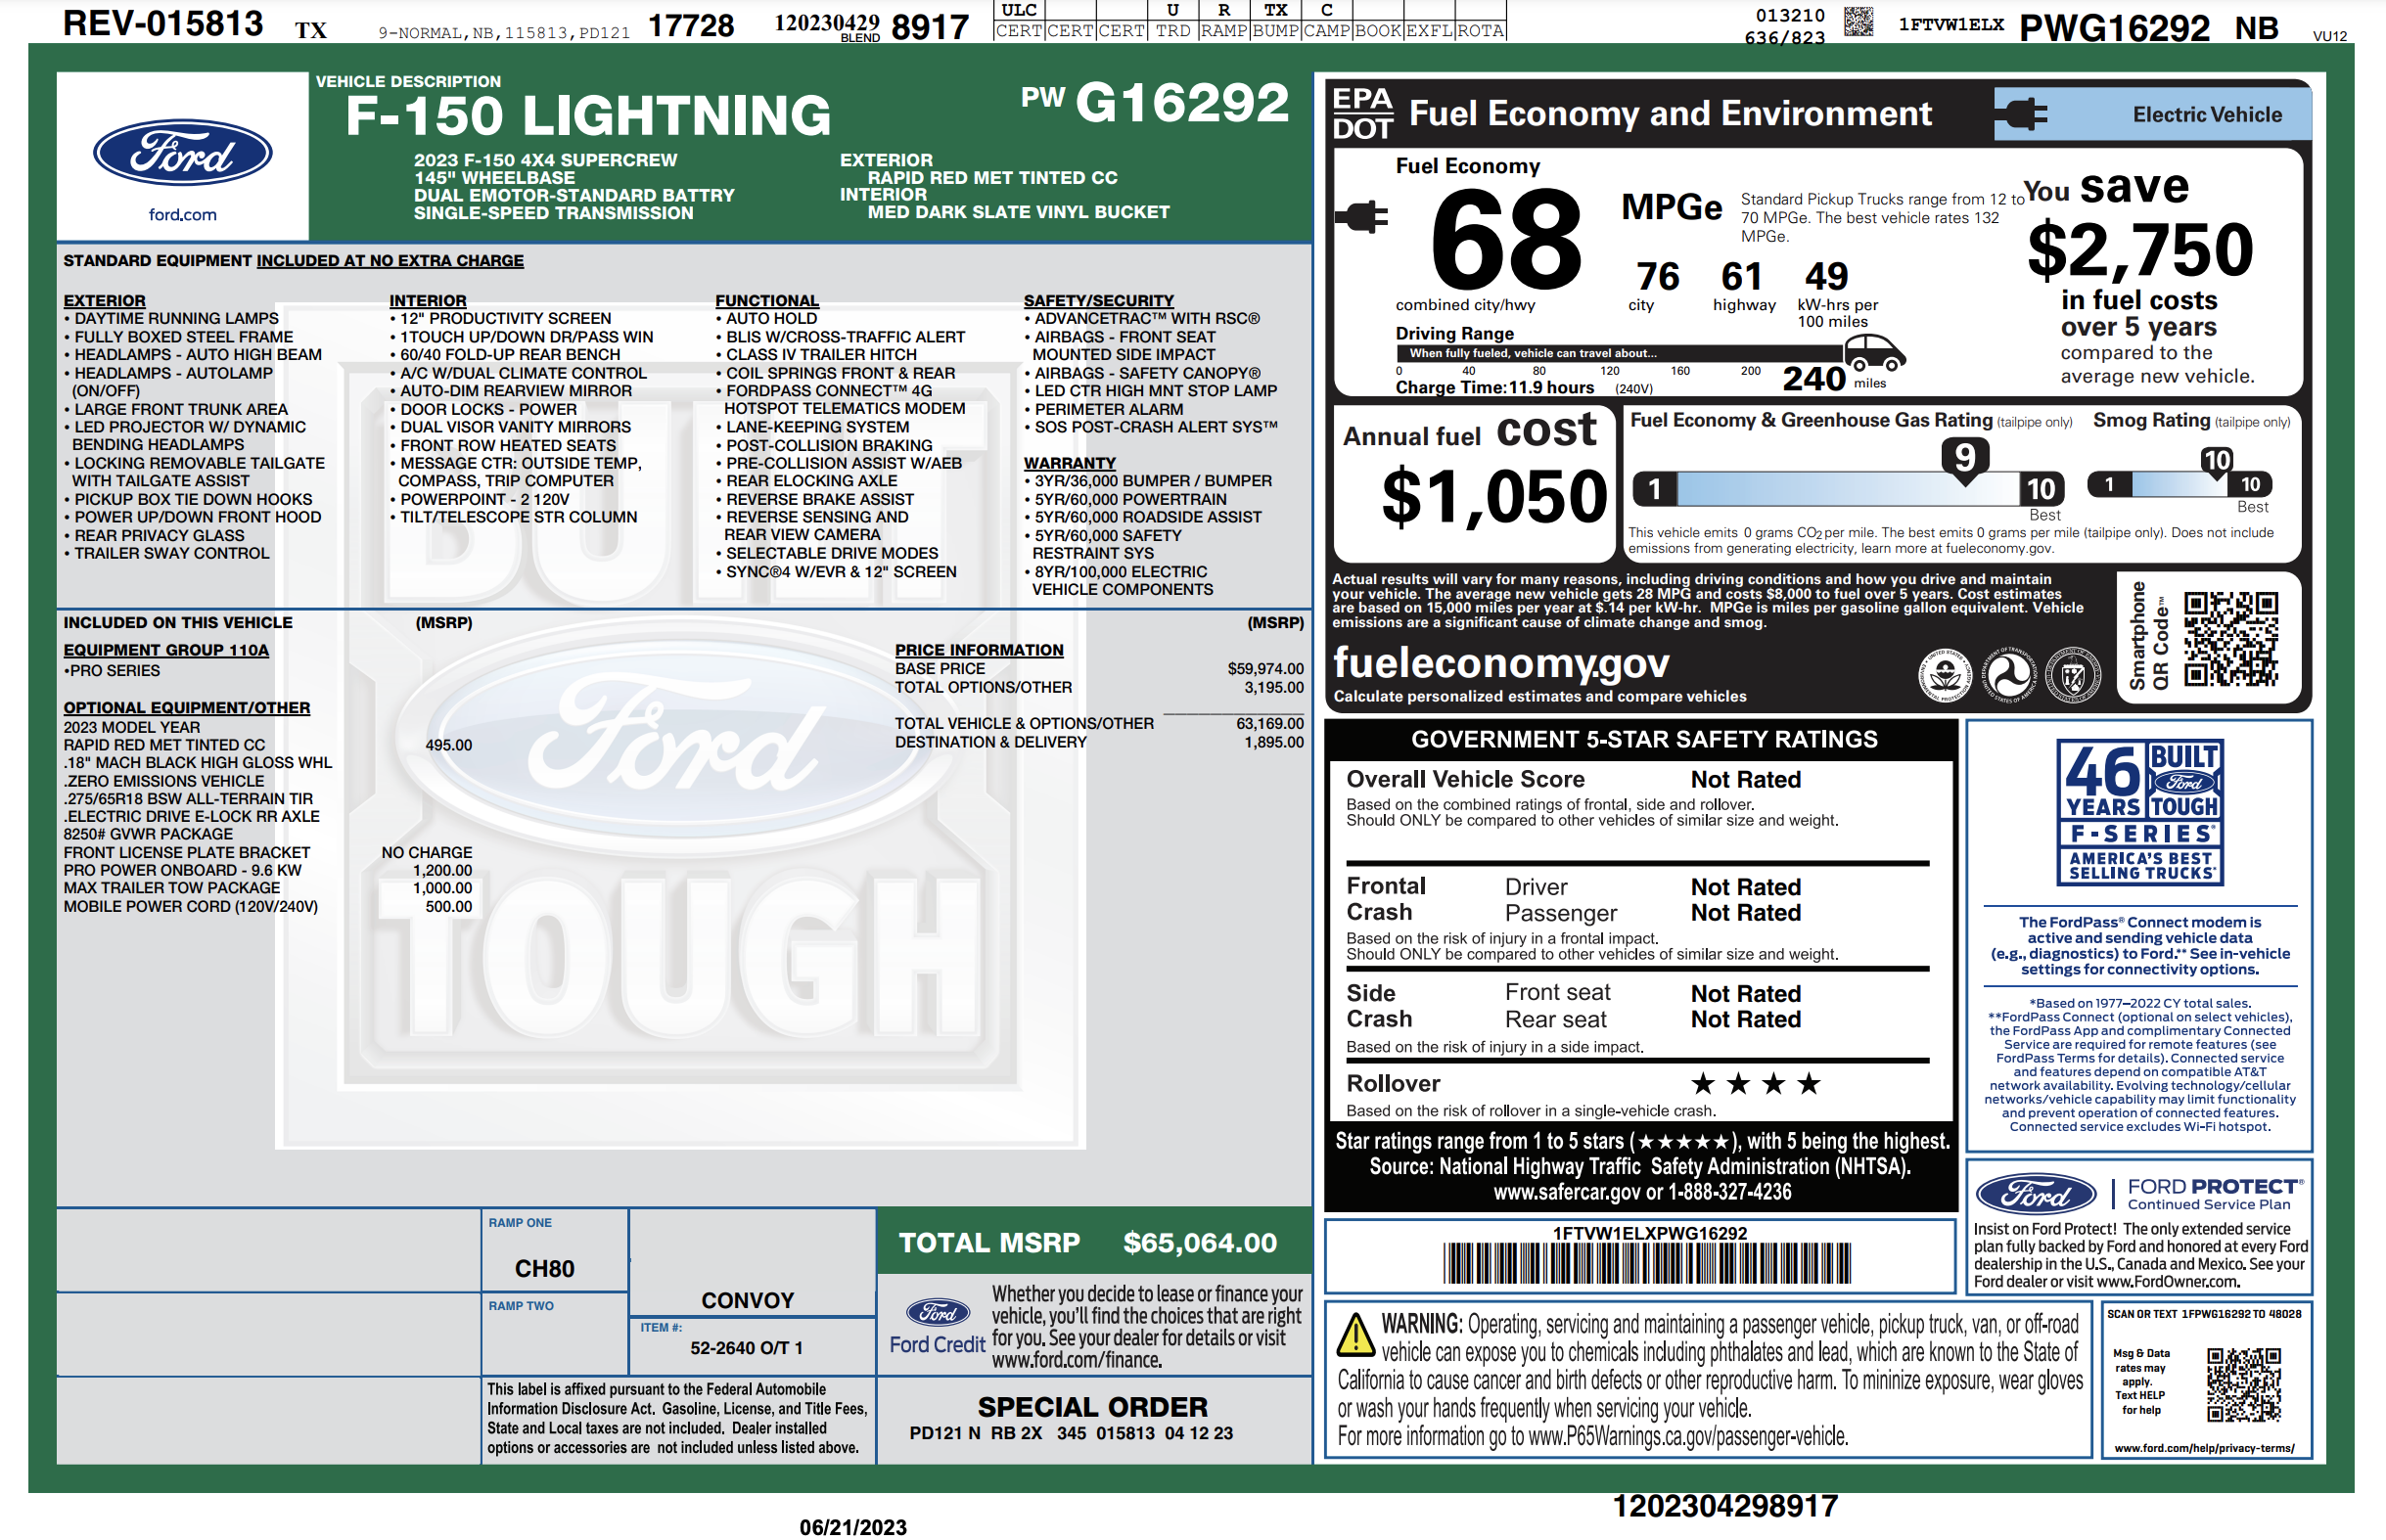 Ford F-150 Lightning WTB: 2022 or 2023 Lariat ER Screenshot 2023-06-21 at 4.59.12 PM